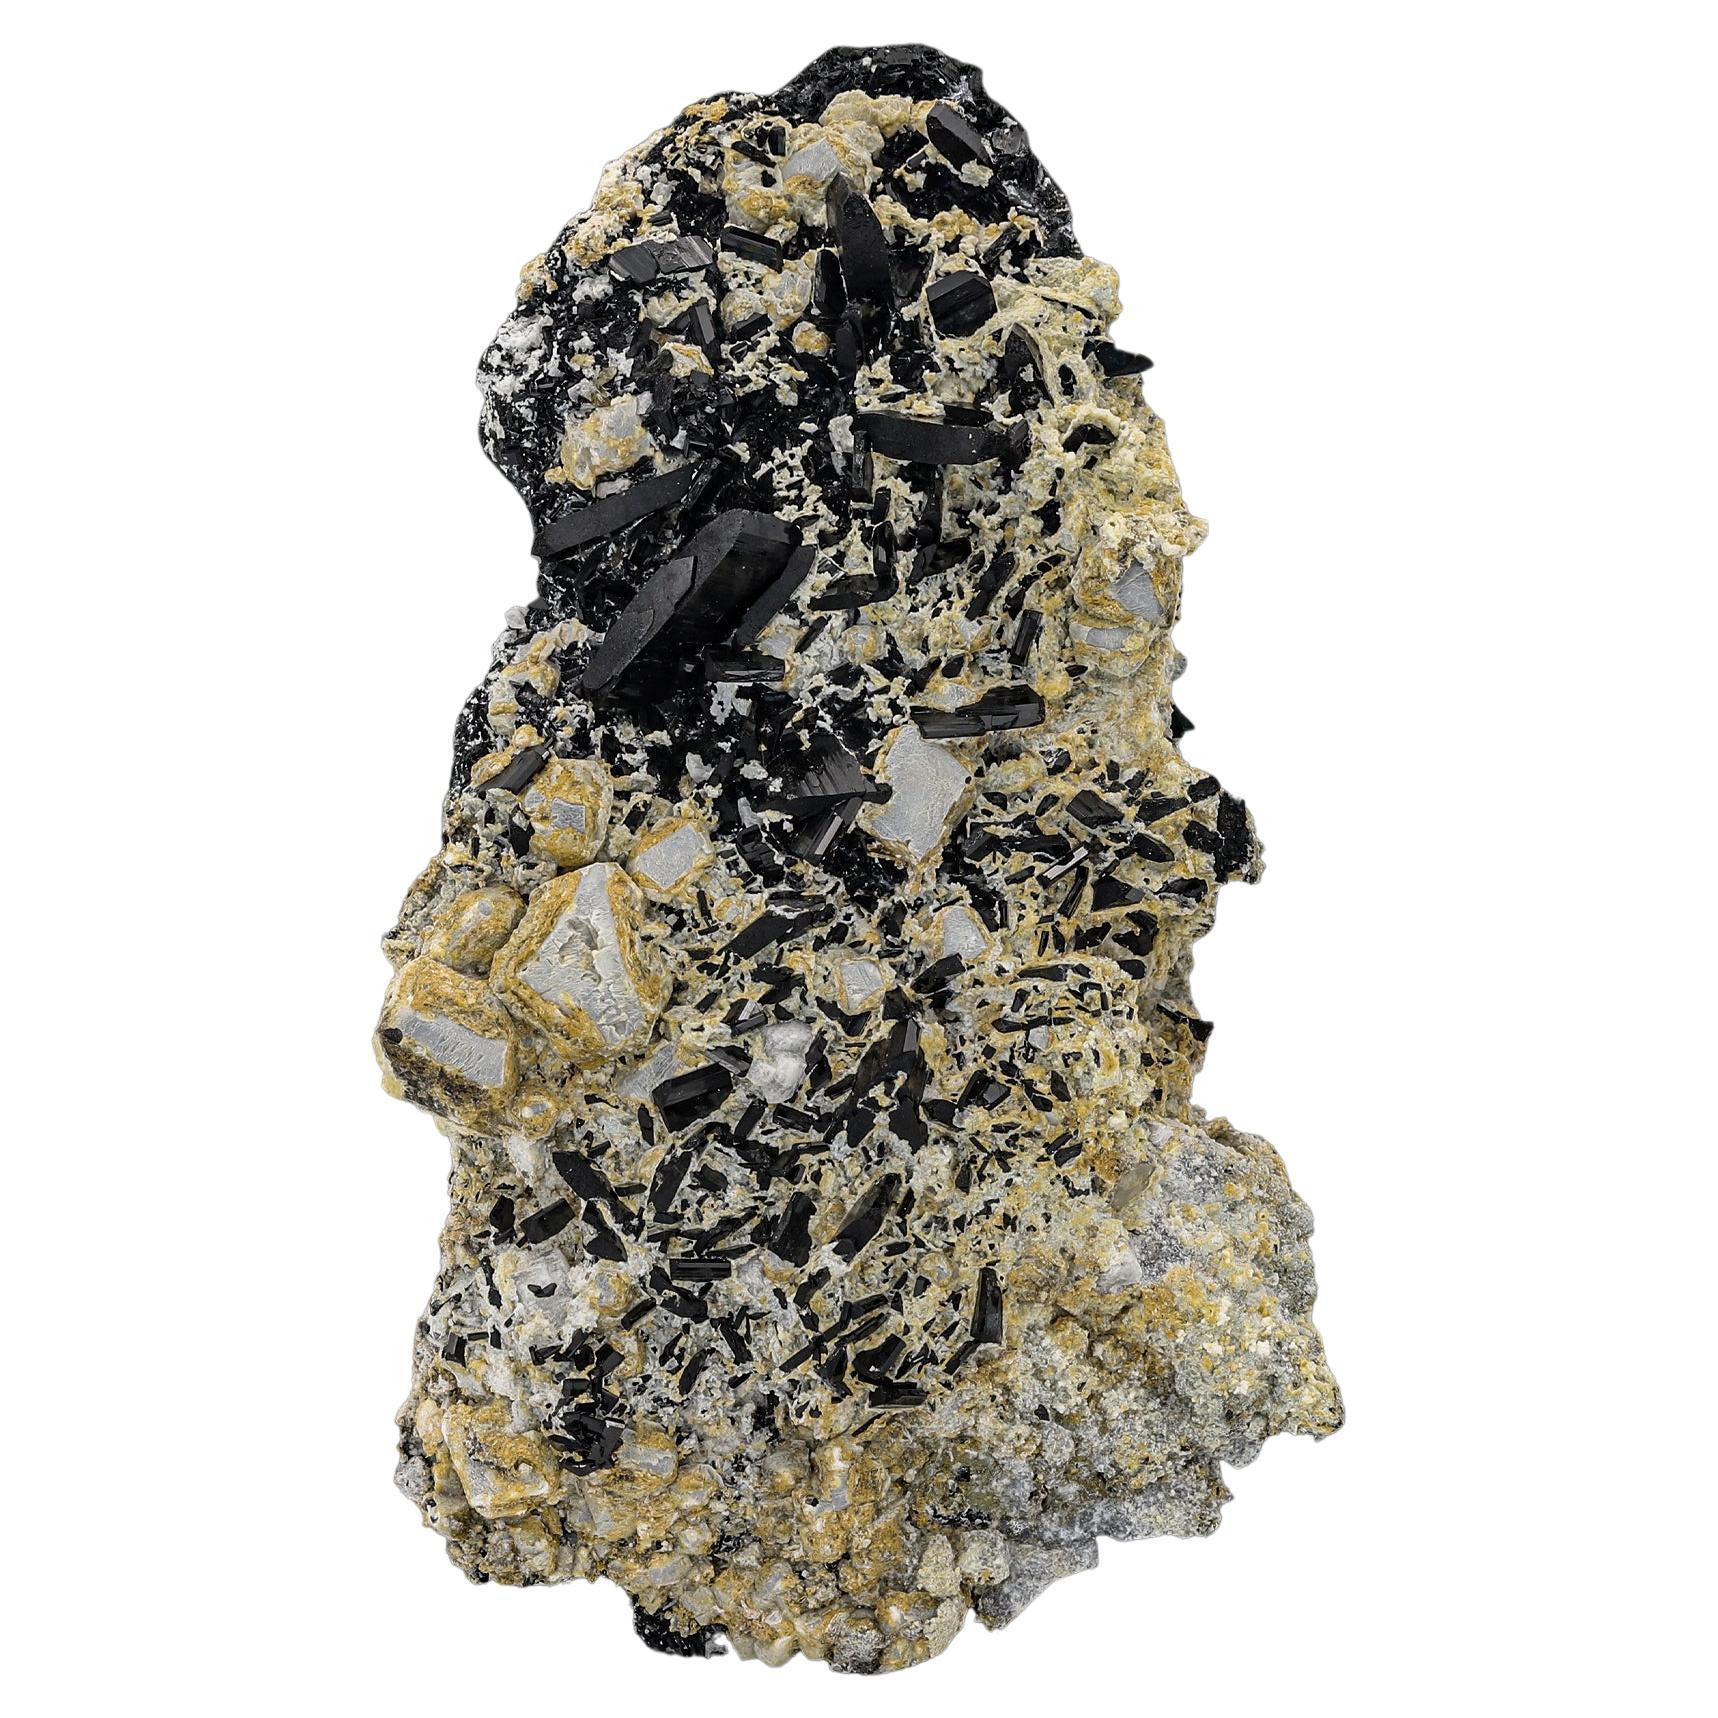 Rare Striking Black Color Augite On Calcite From Zagi Mountains, KPK, Pakistan For Sale